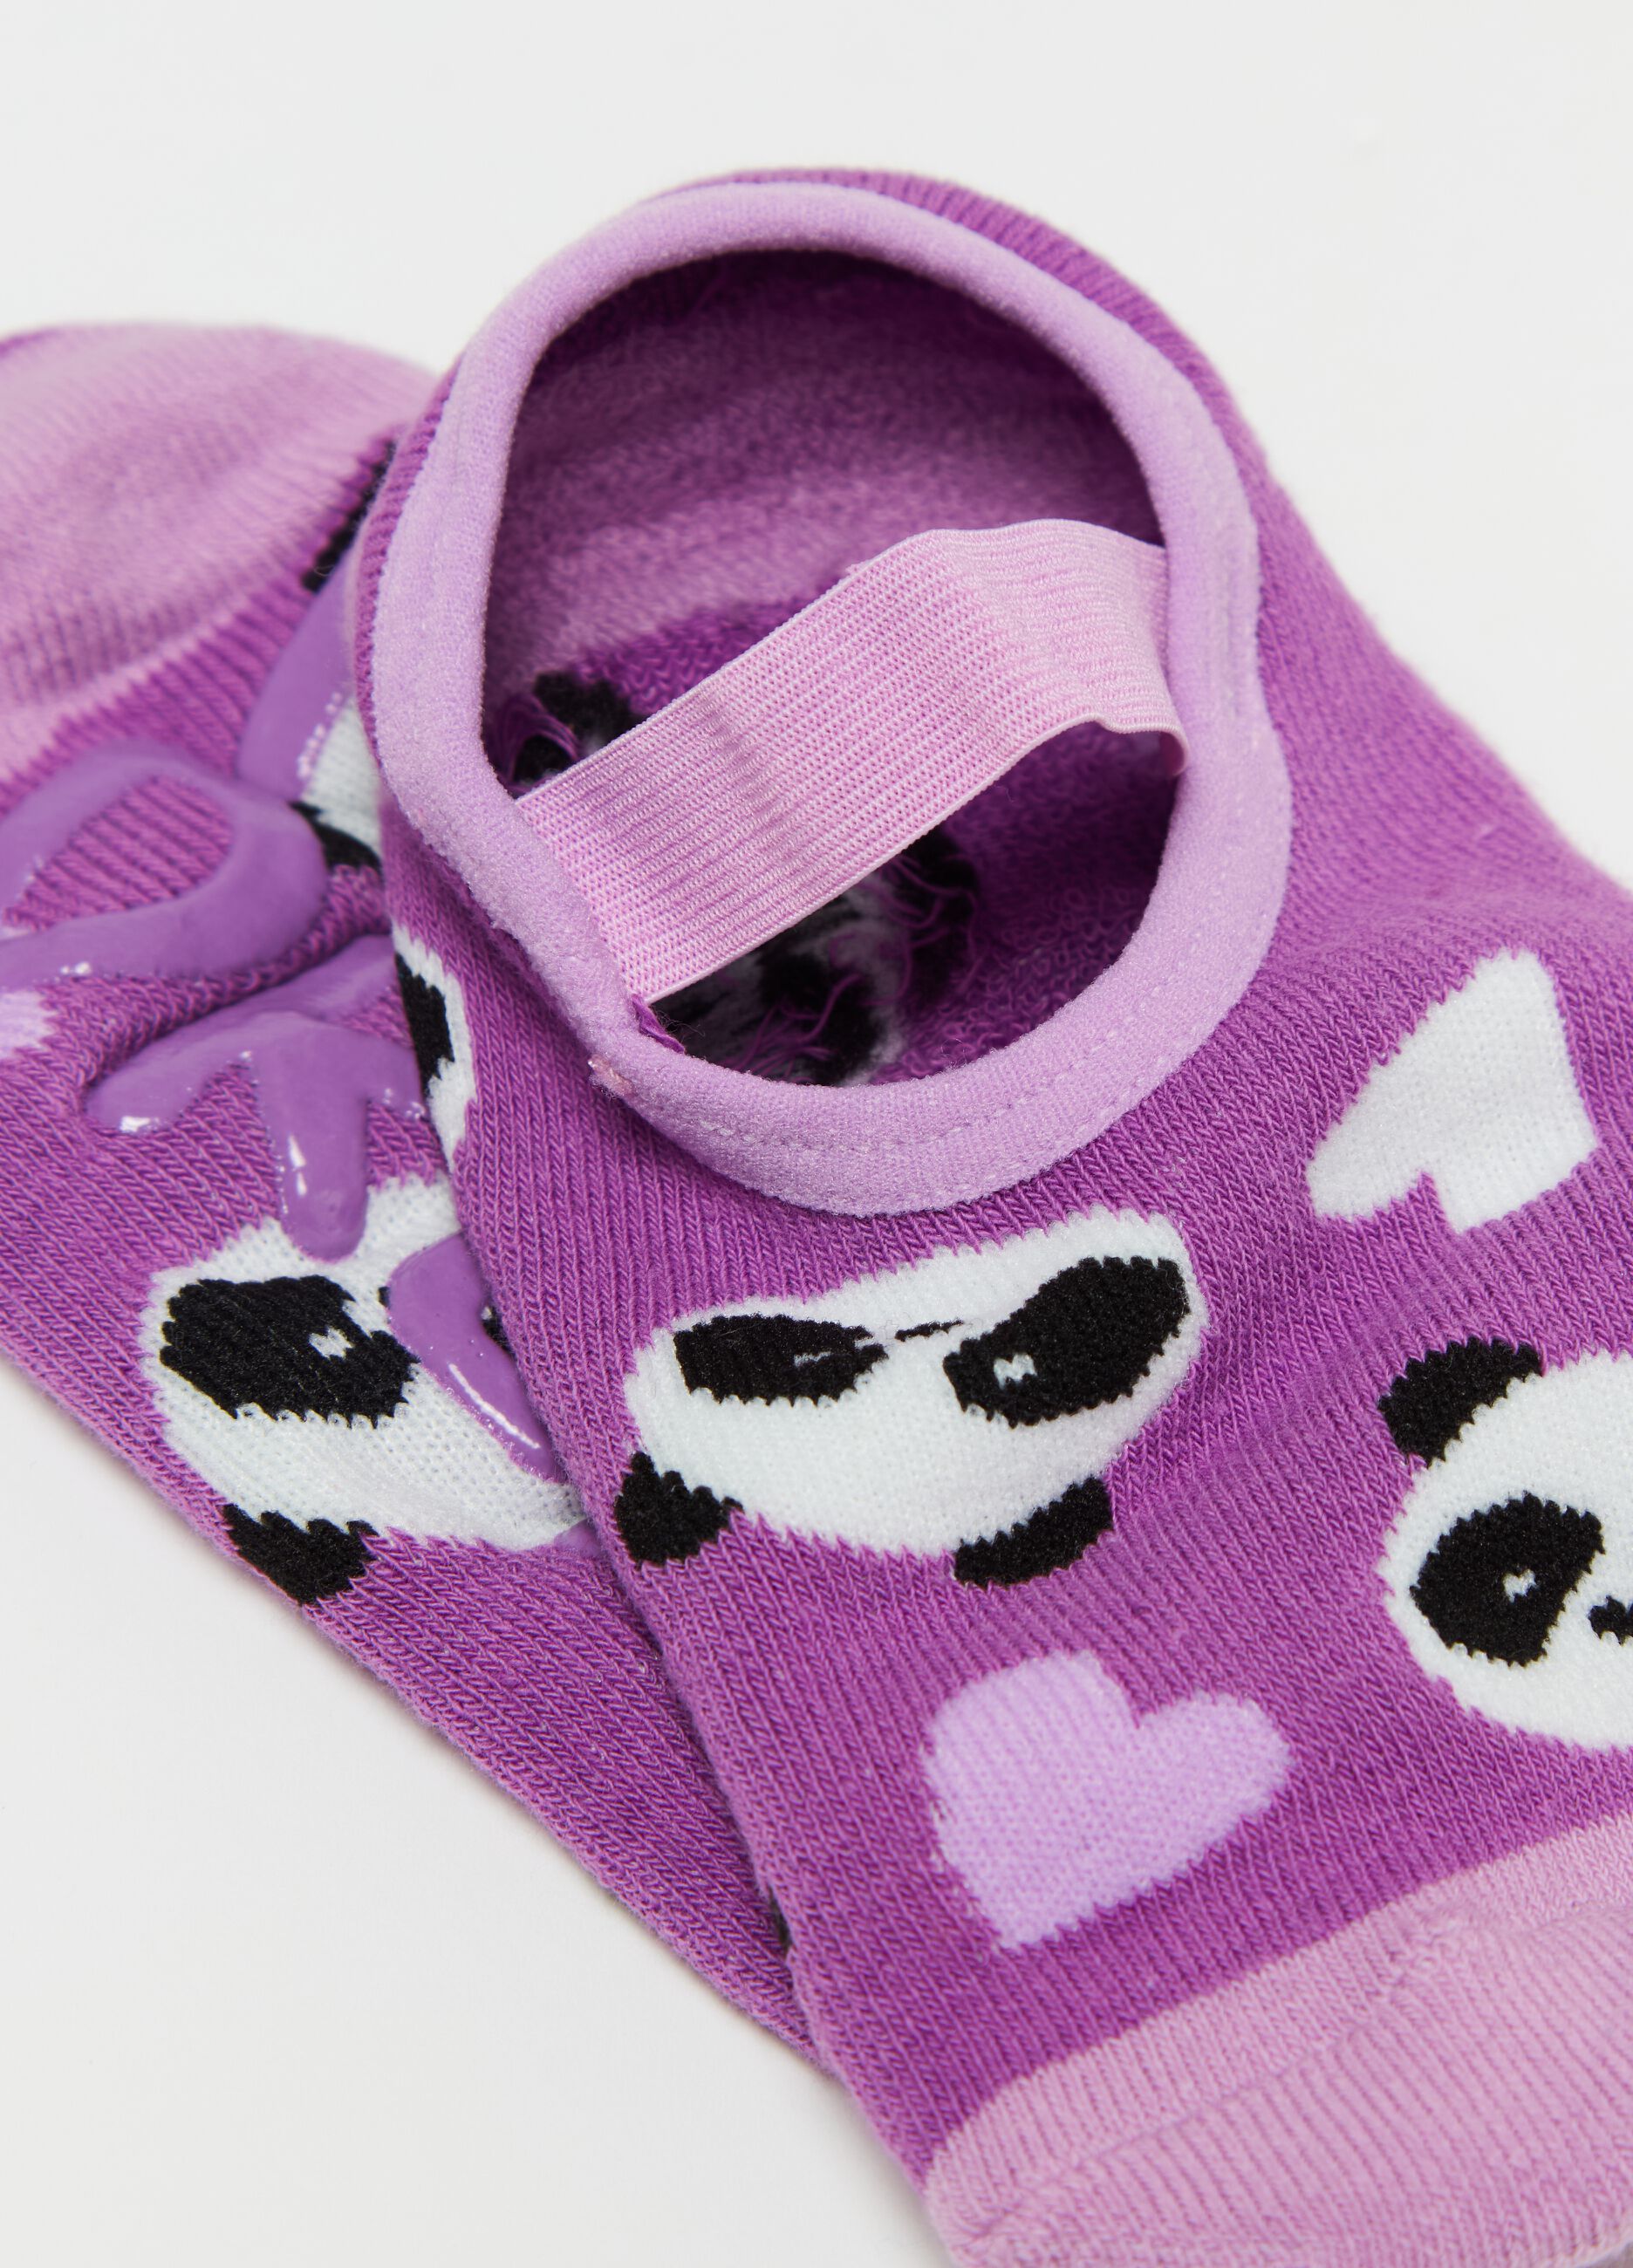 Slipper socks with panda and hearts design